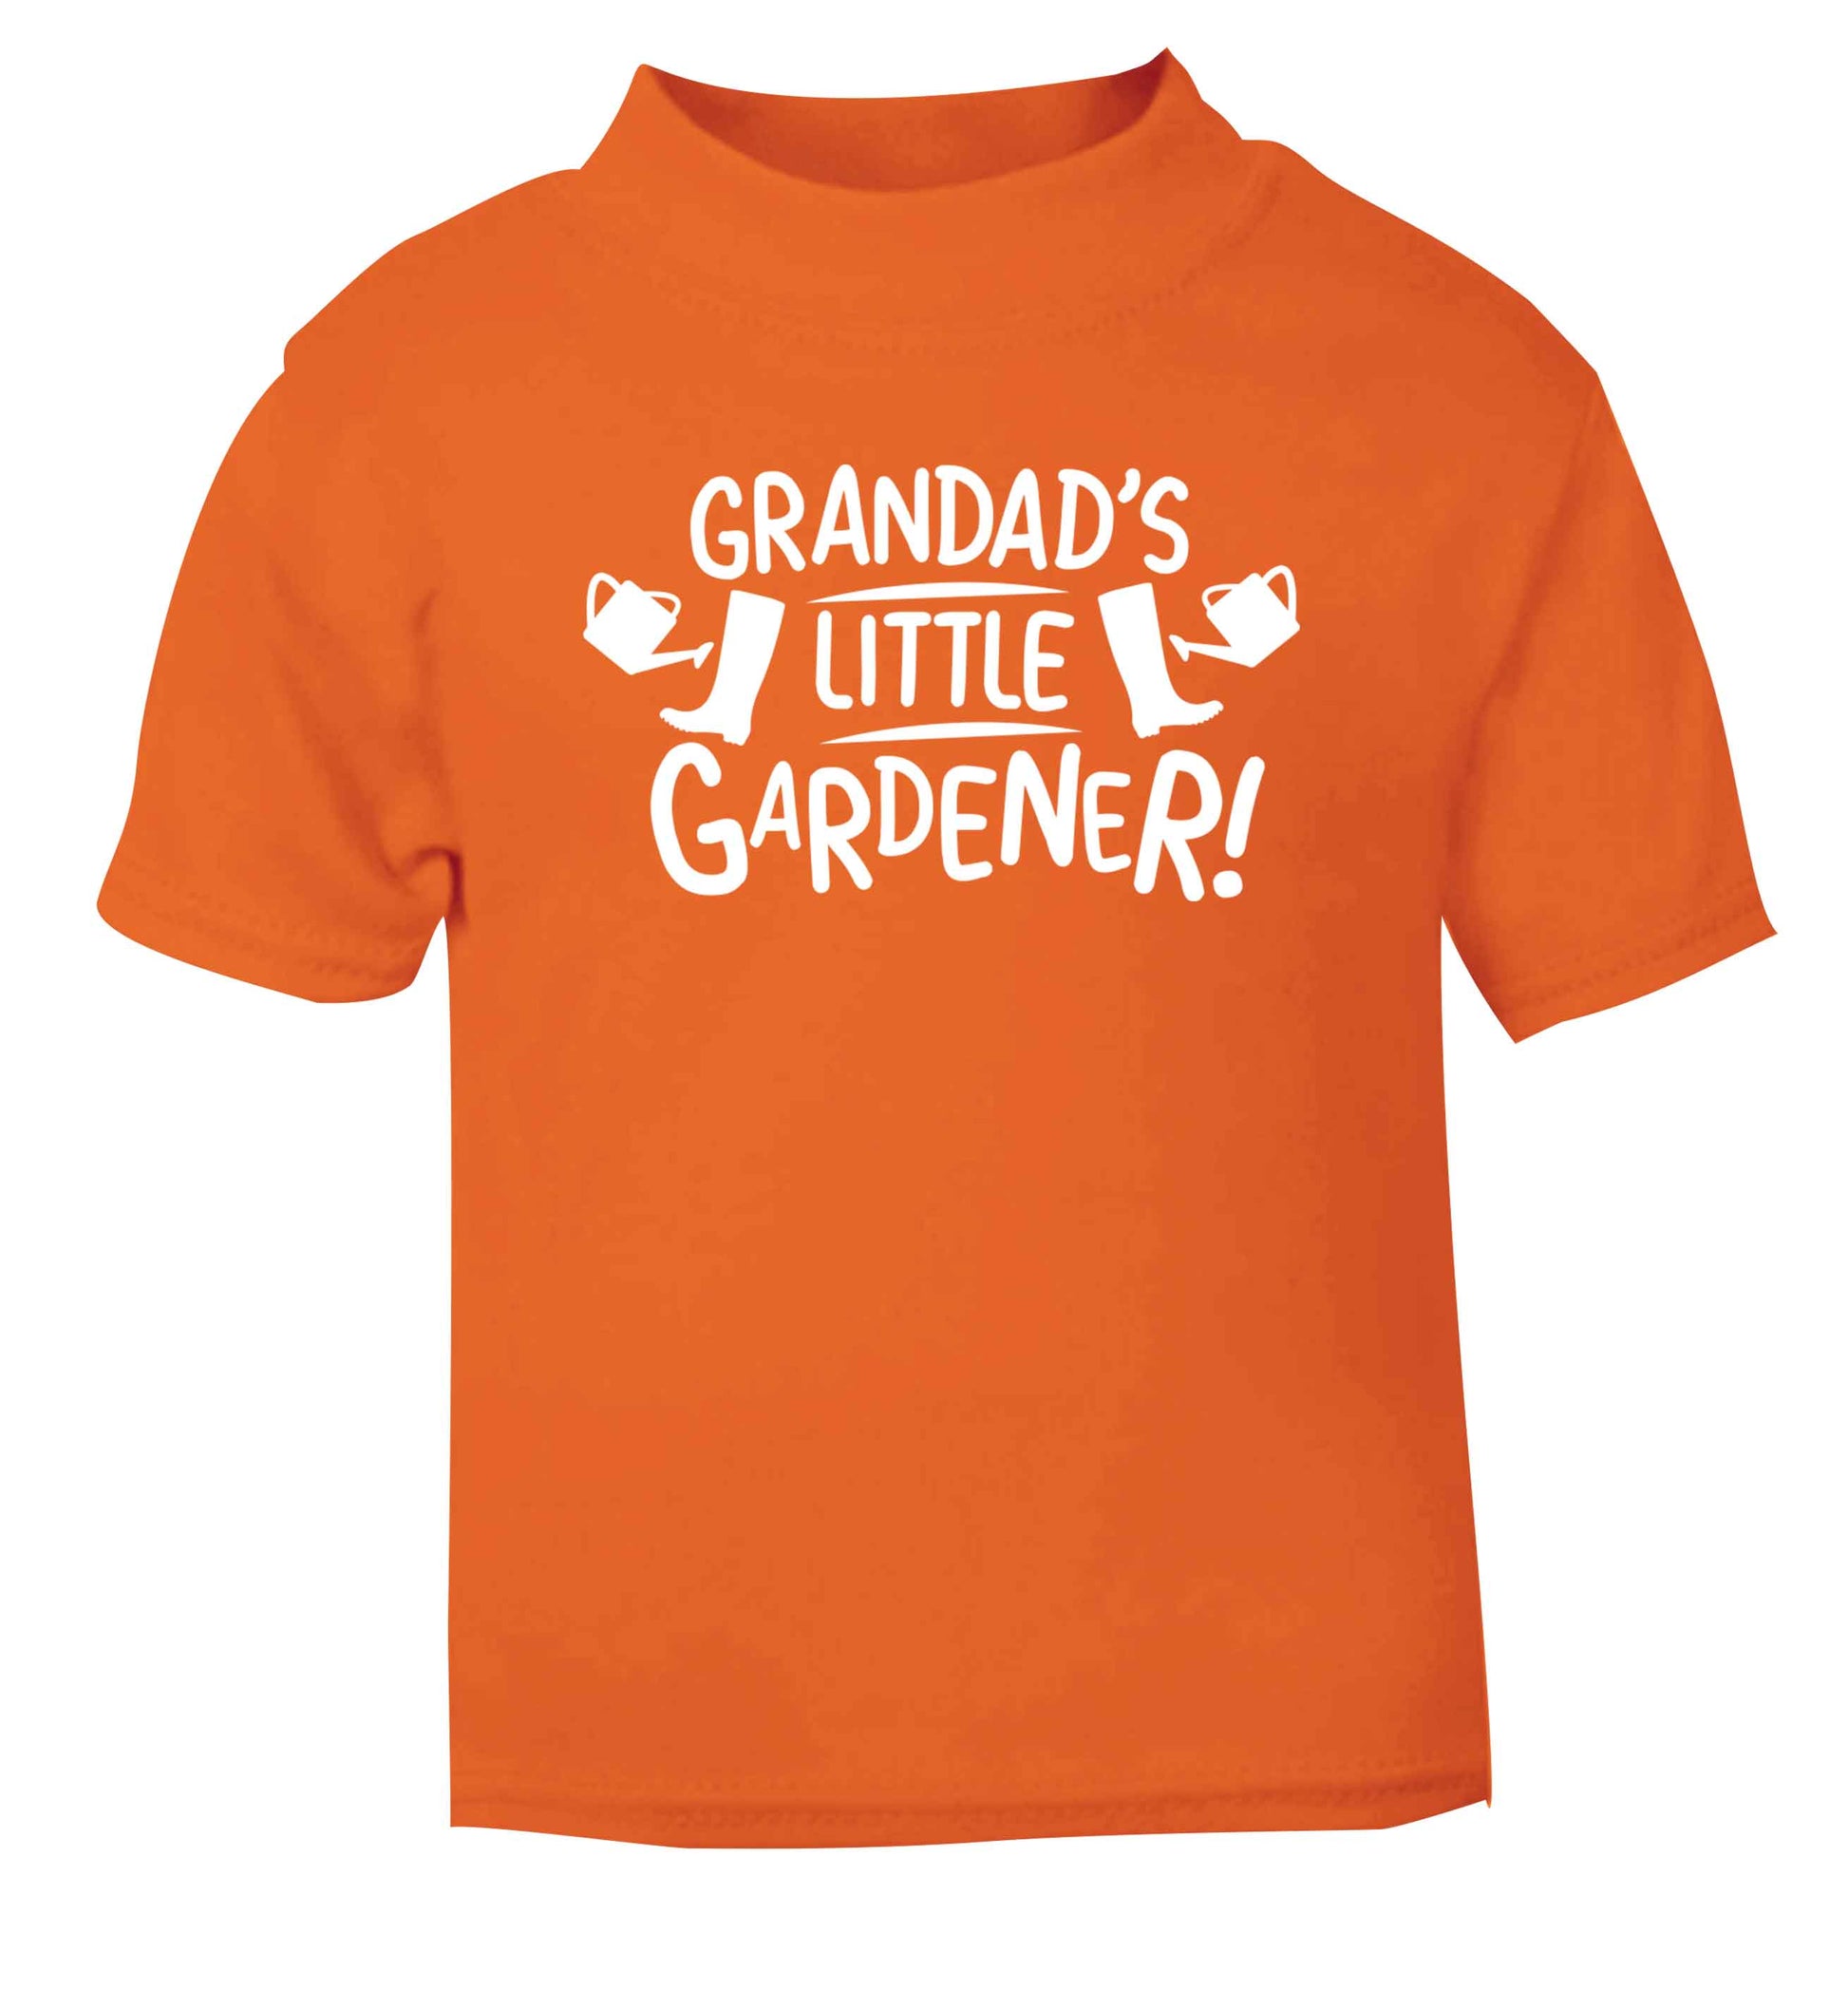 Grandad's little gardener orange Baby Toddler Tshirt 2 Years